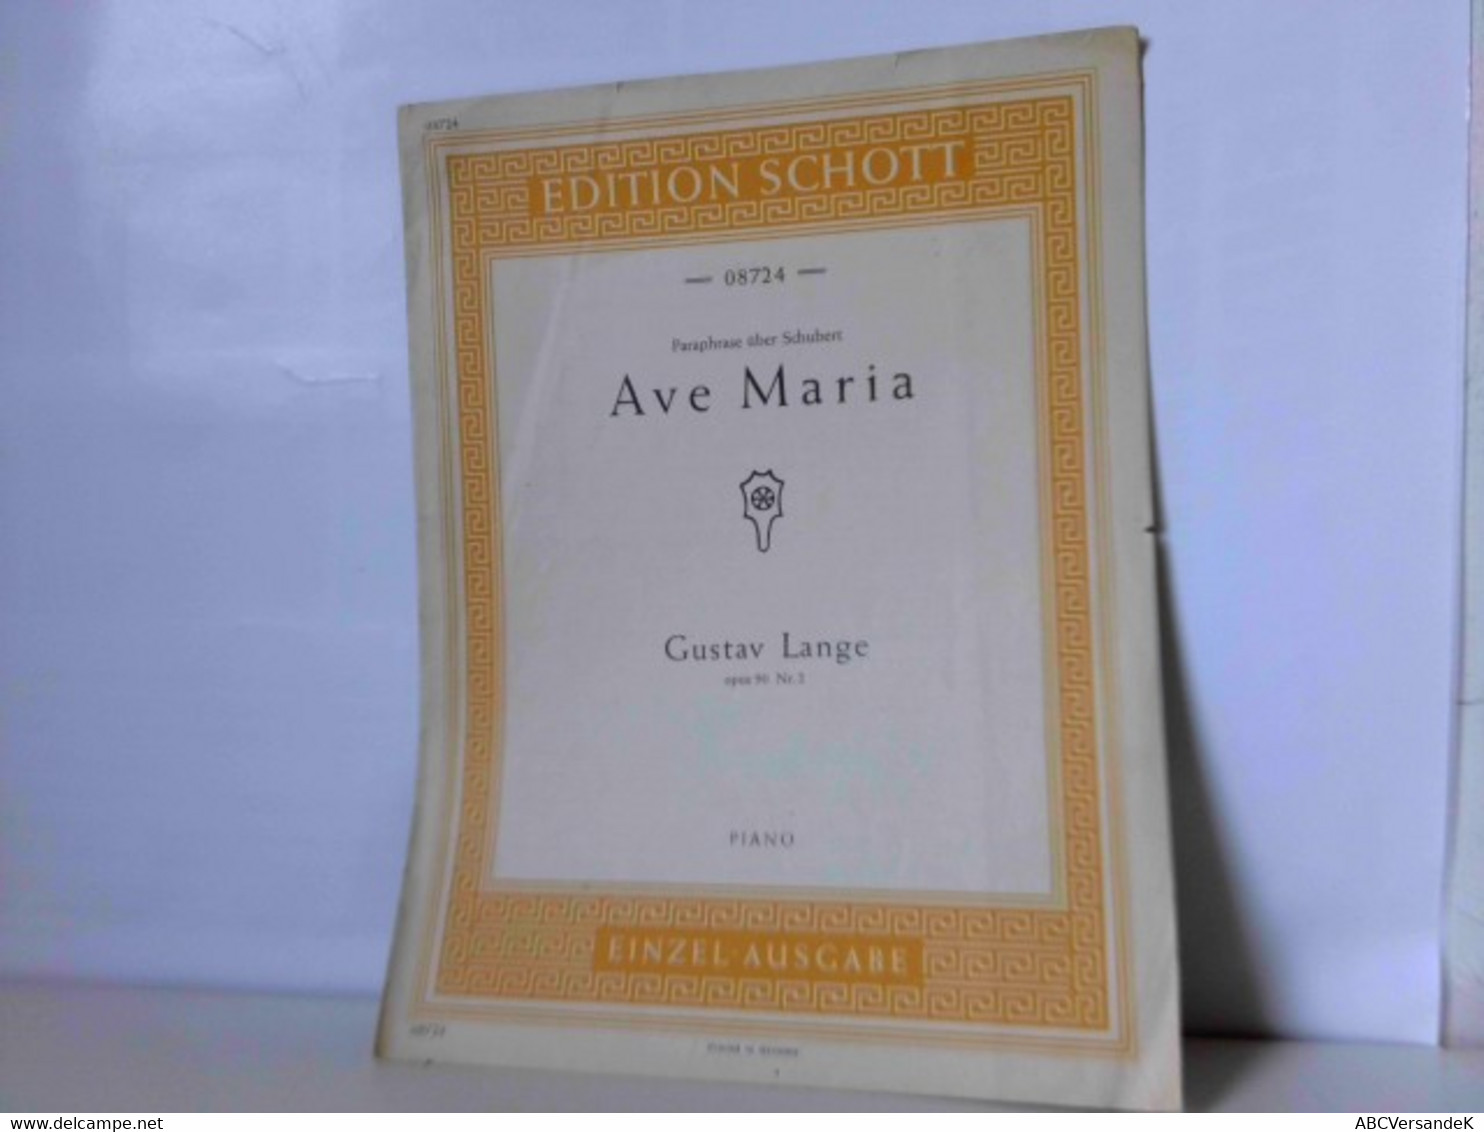 Ave Maria. Paraphrase über Schubert. Opus 90 Nr. 2. Edition Schott No. 08724. Piano - Music